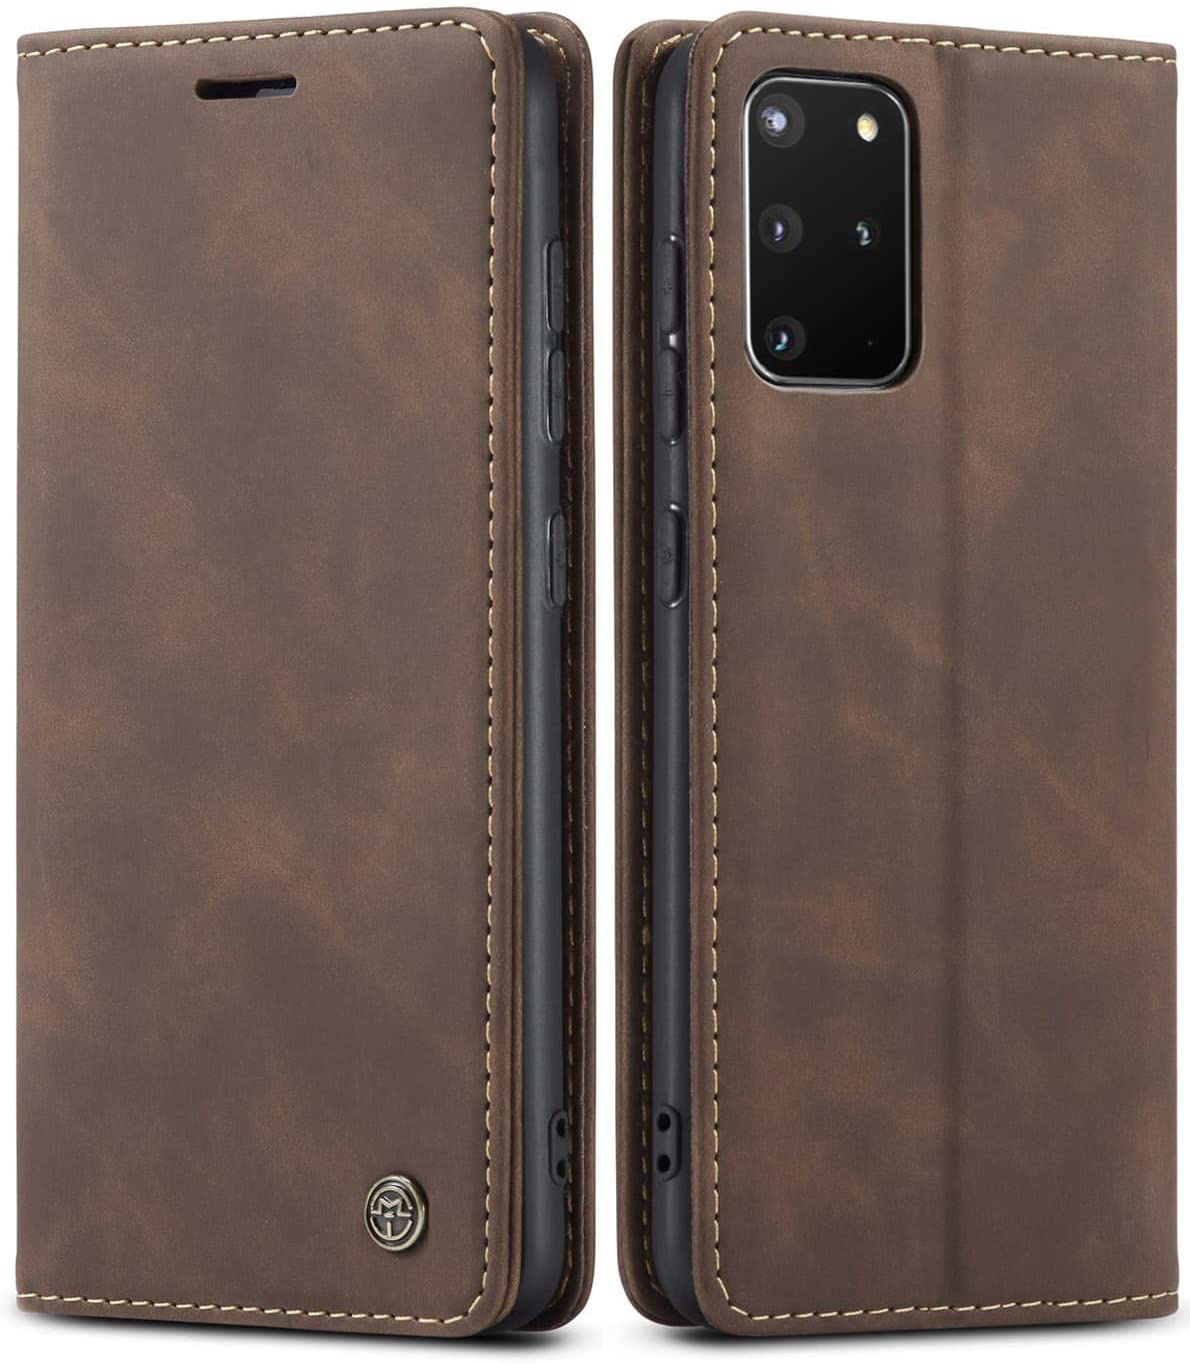 Samsung Galaxy S20 5G high quality unique designer case coverSamsung Galaxy S20 Plus high quality unique designer case cover